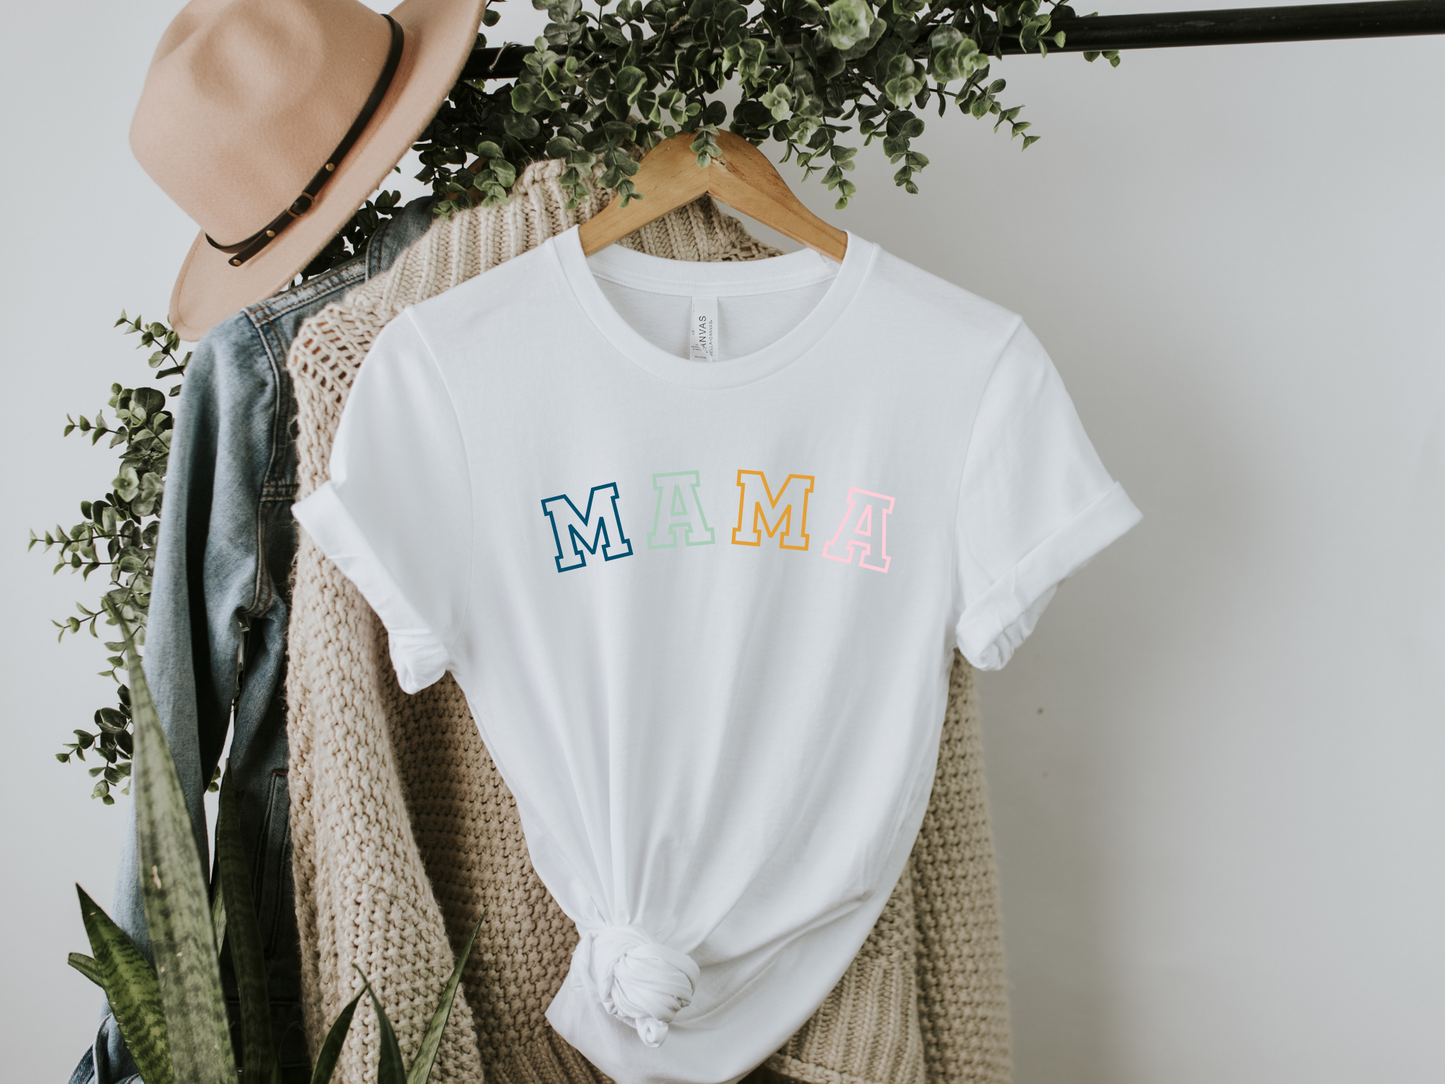 Mama and Mini Boho Shirt Set